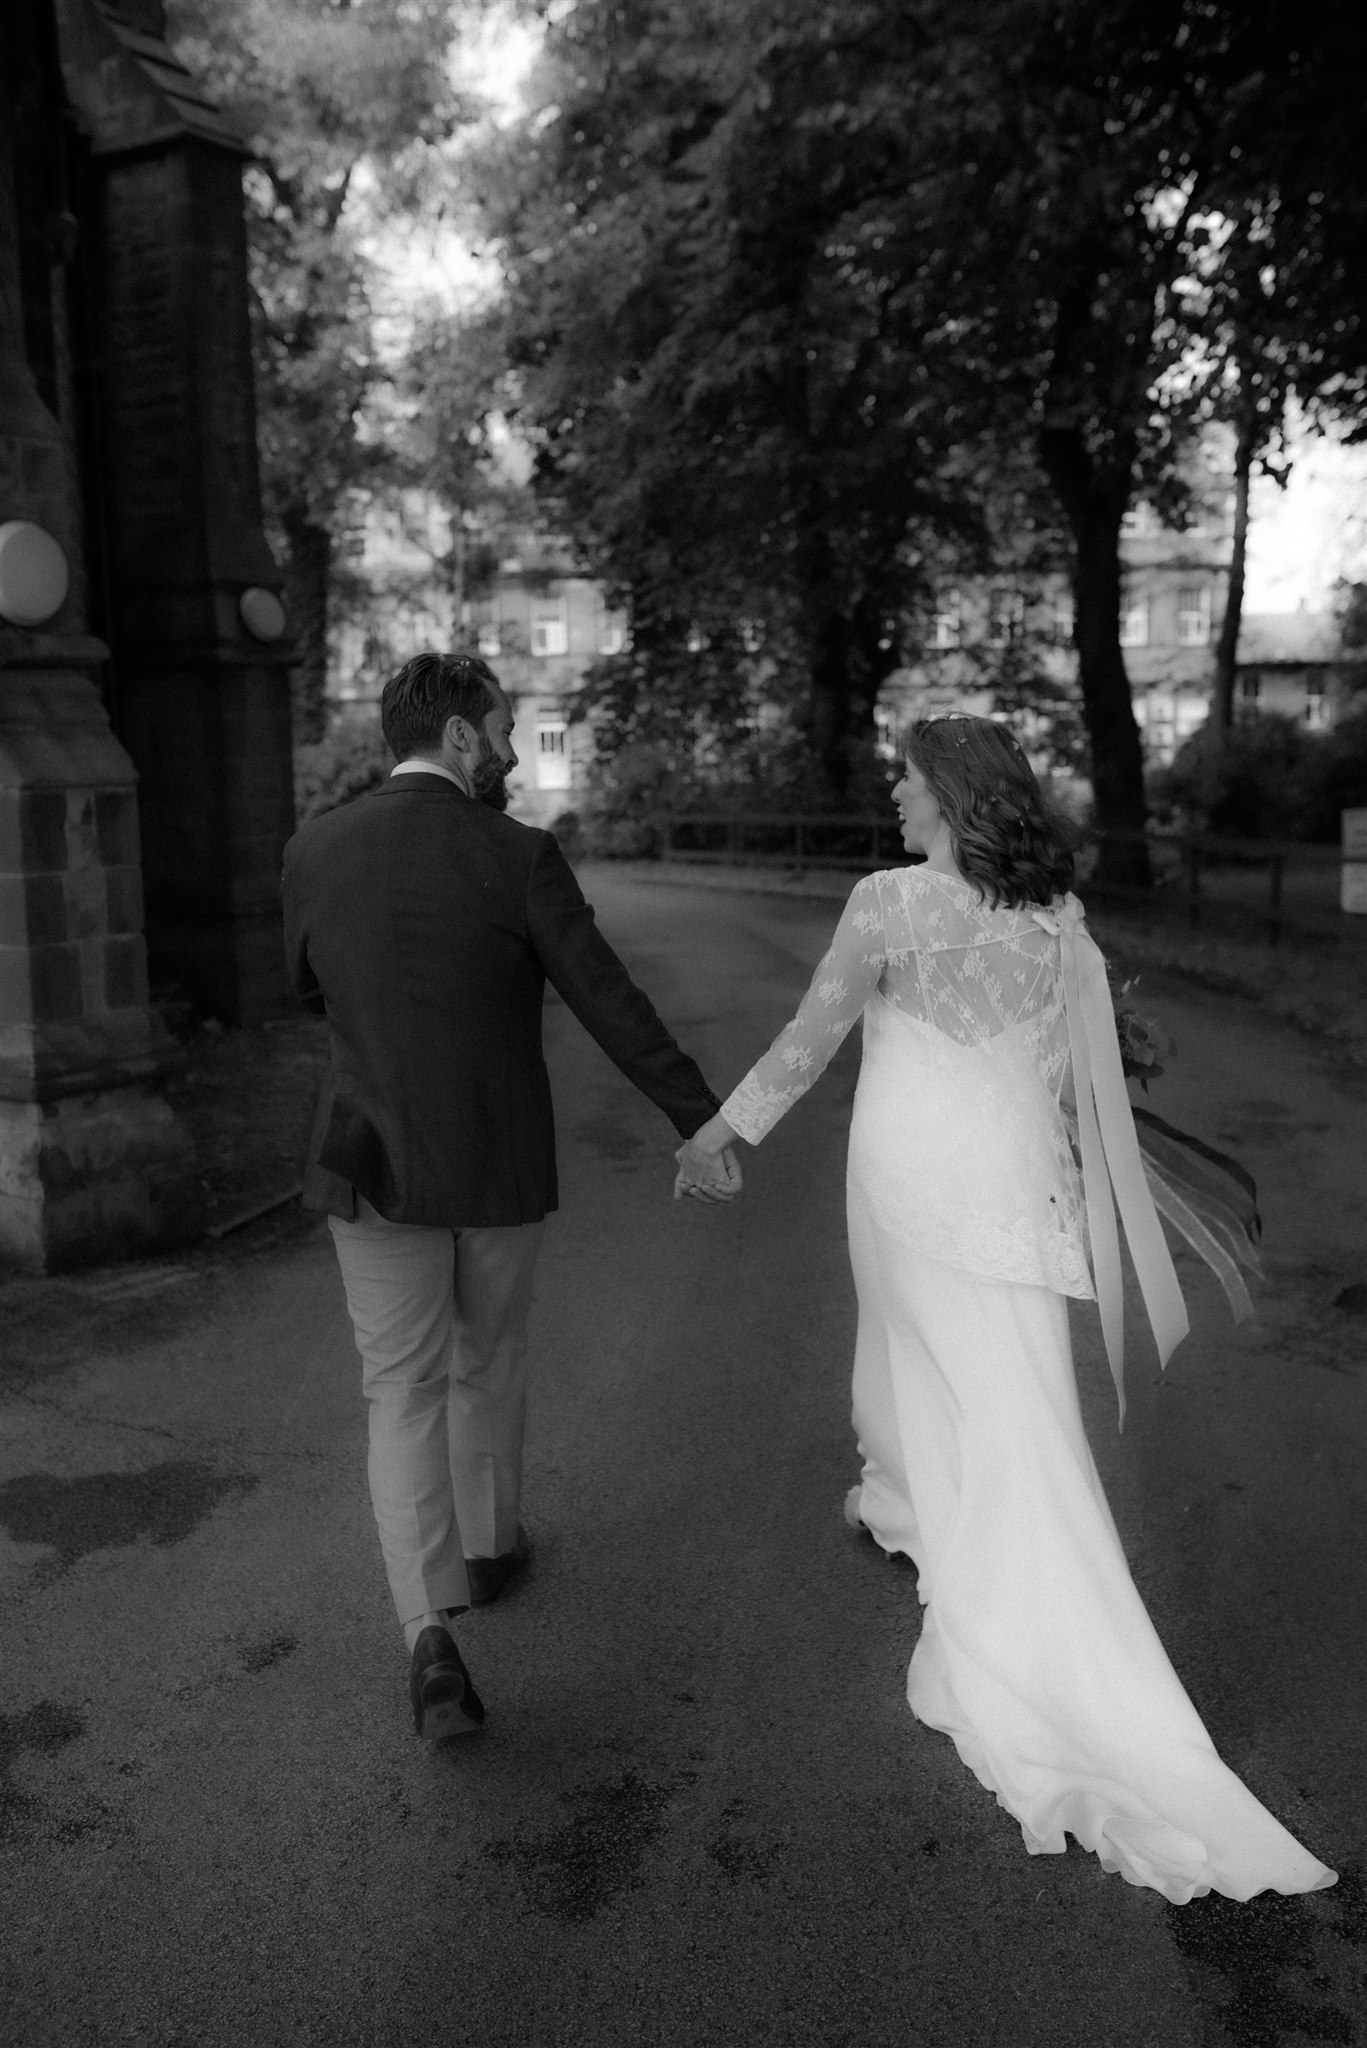 Sheffield wedding photography unique, creative, dreamy and documentary style wedding photographer uk glasgow